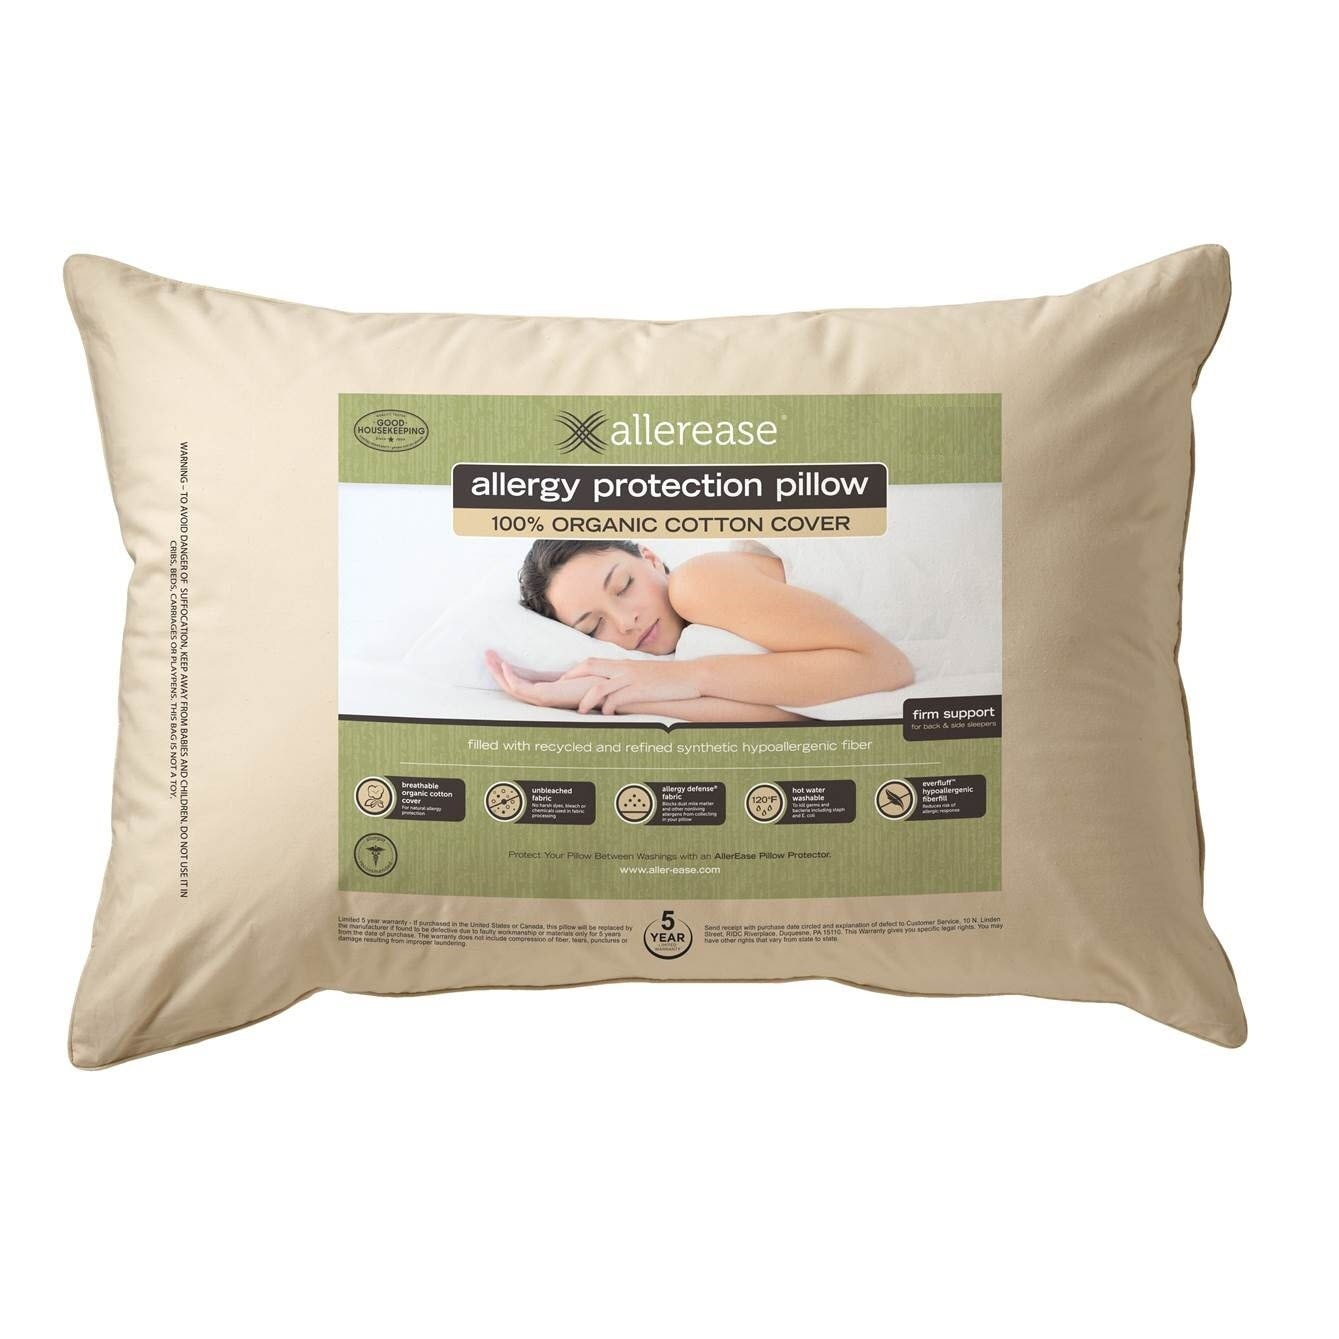 https://ak1.ostkcdn.com/images/products/is/images/direct/11de121de4c807beead8dbd453da9e3445b53049/AllerEase-Organic-Cotton-Top-Allergy-Protection-Pillow.jpg